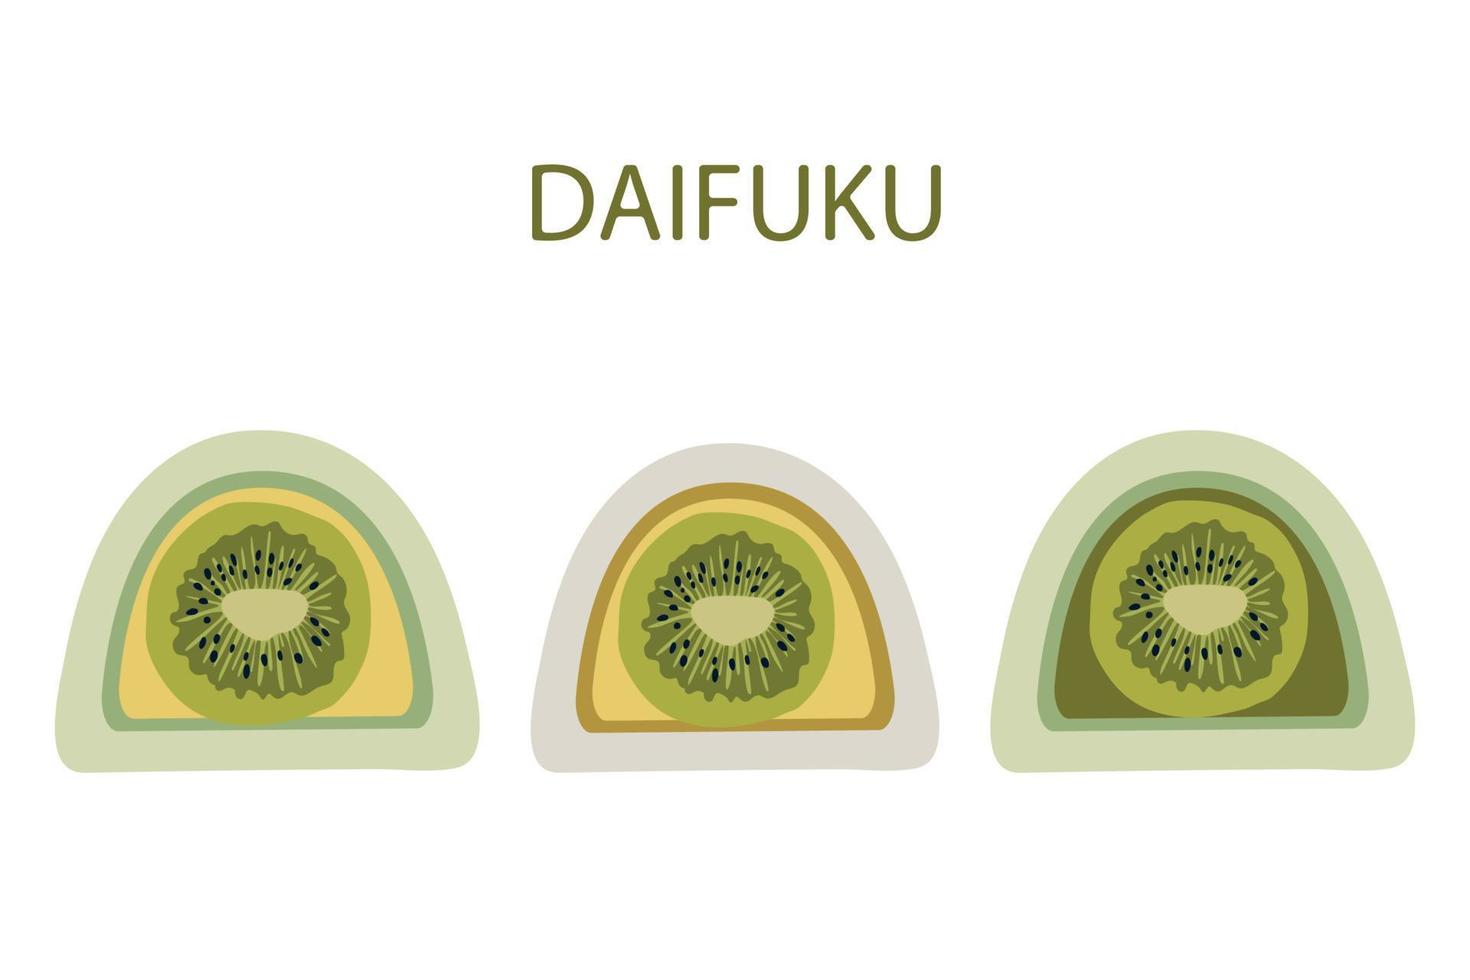 vecteur de daifuku. daifuku sur fond blanc. le daifuku est un dessert japonais. collection de différents mochi daifuku